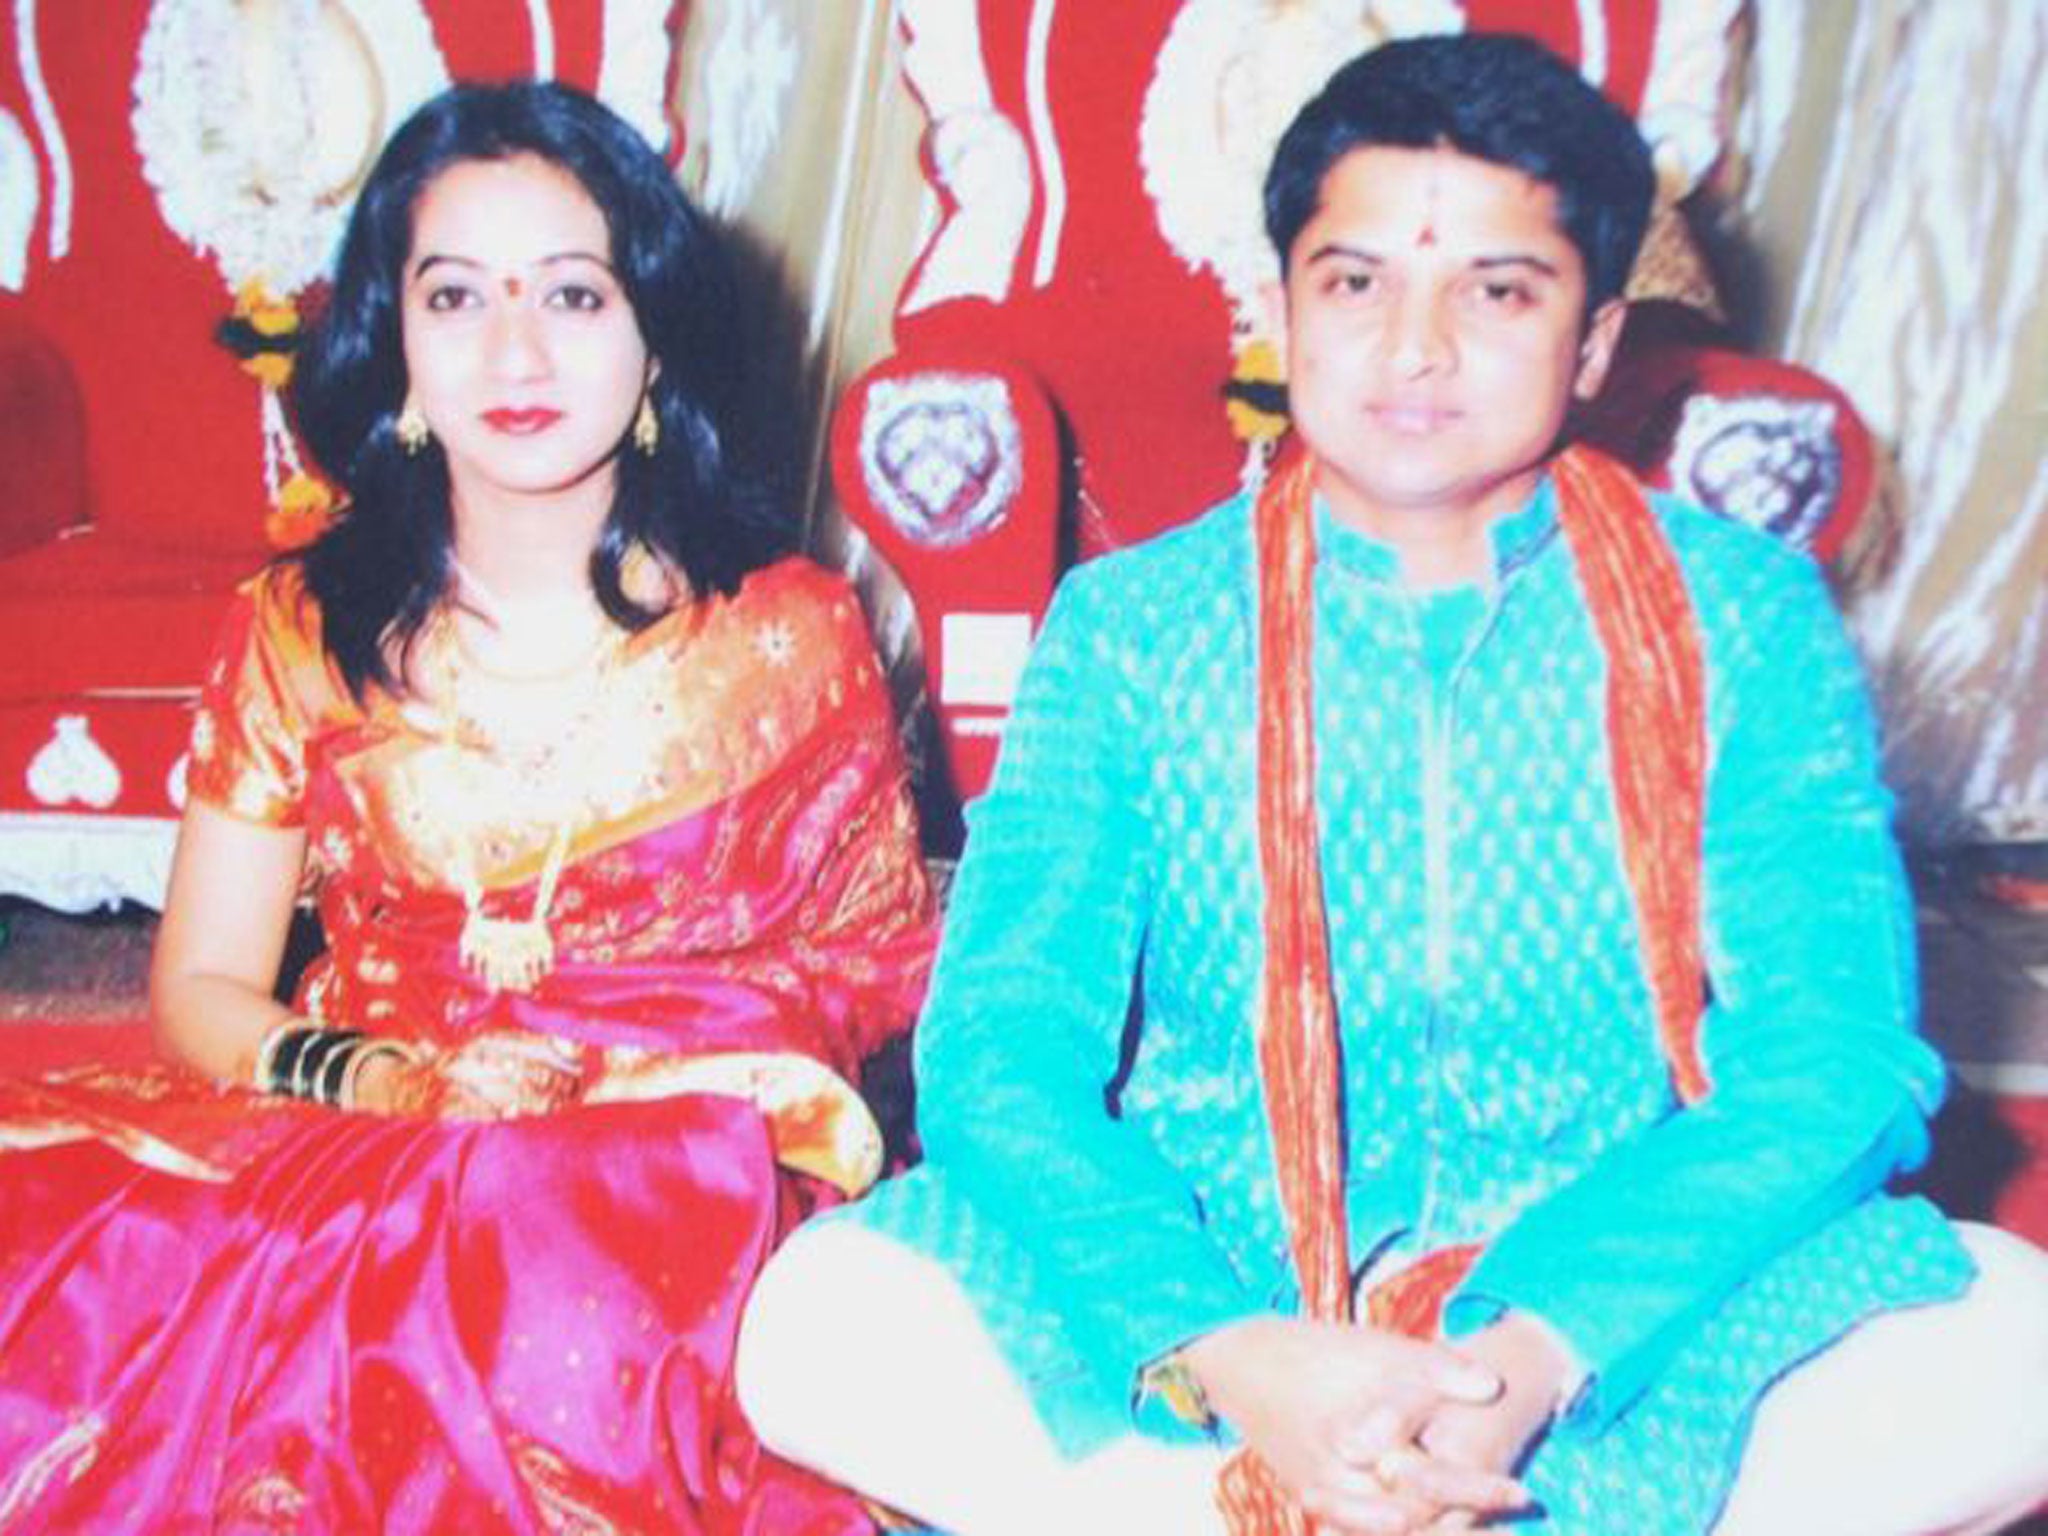 Savita and Praveen Halappanavar on their wedding day in 2008